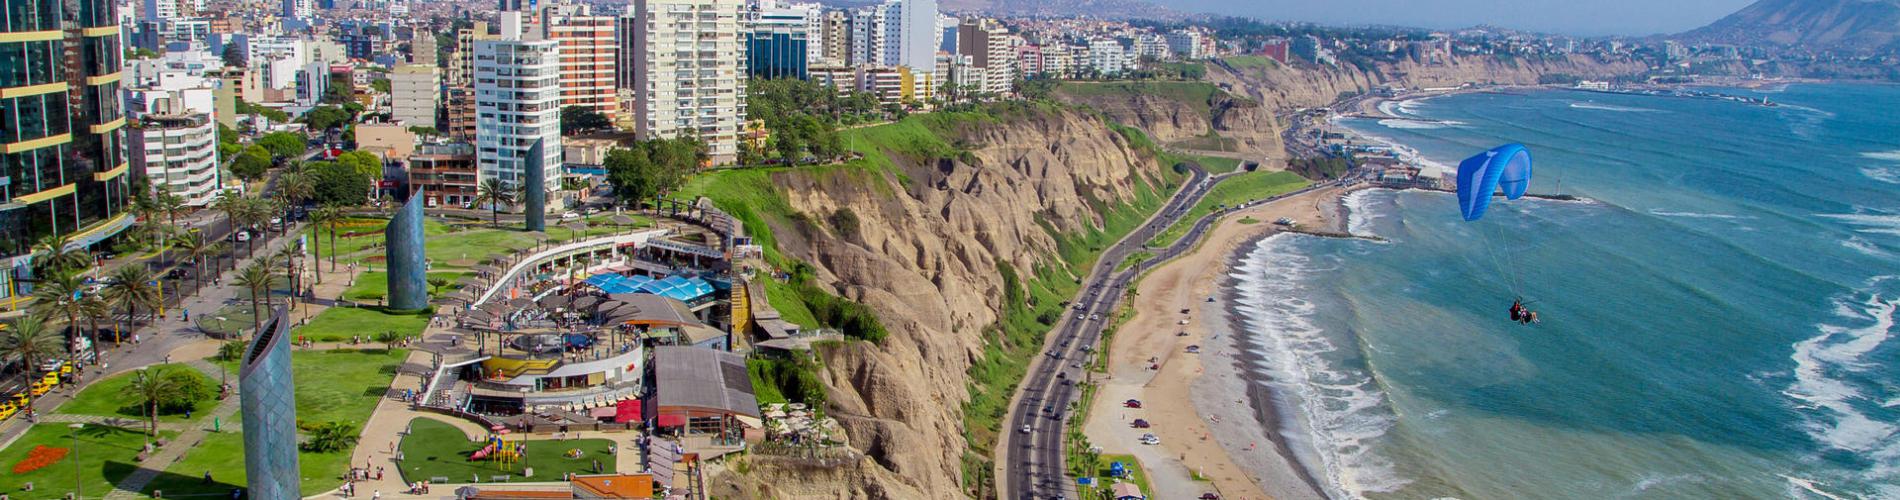 Lima’s scenic clifftop walkway